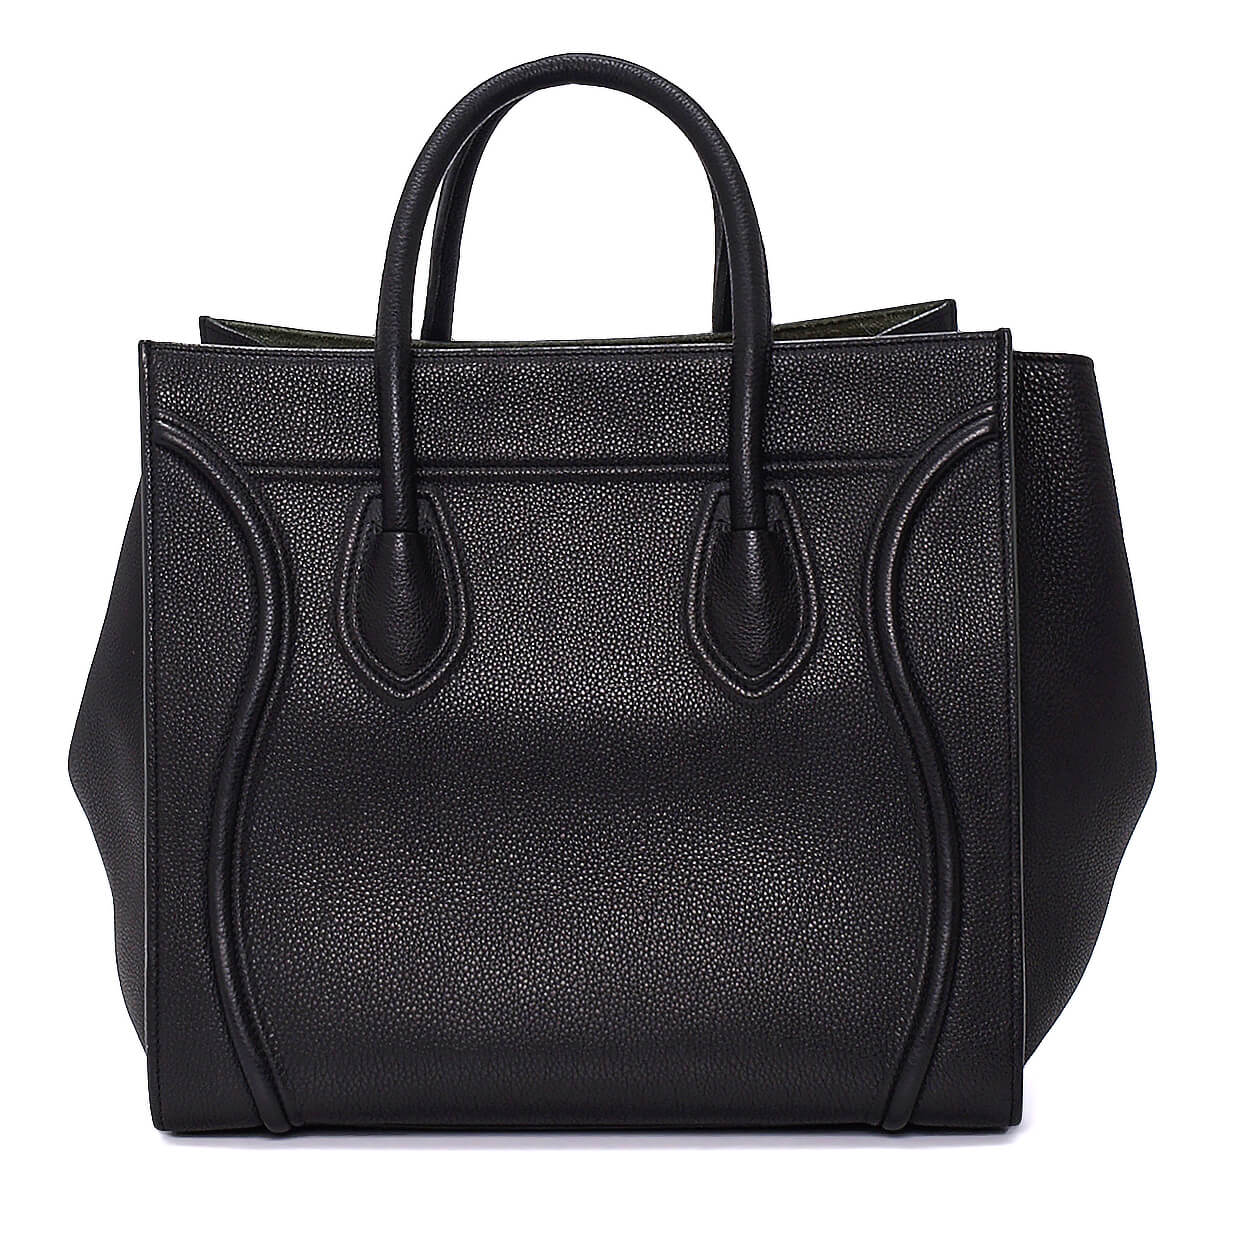 CELINE - Black Leather Luggage Bag